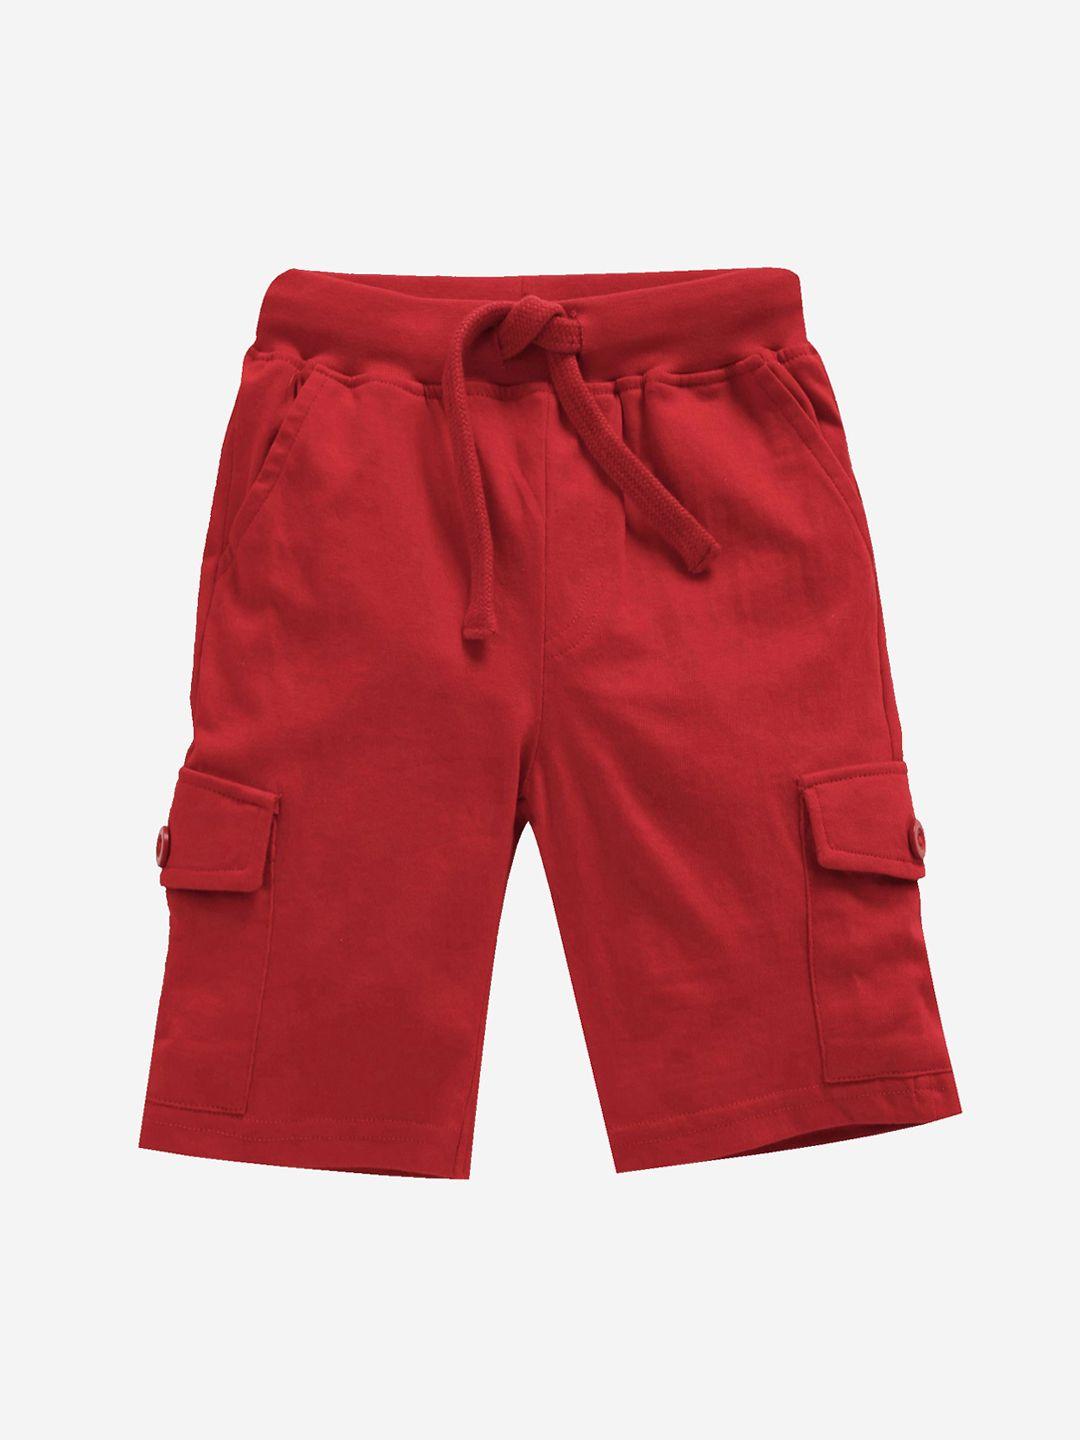 KiddoPanti Boys Red Pure Cotton Cargo Shorts